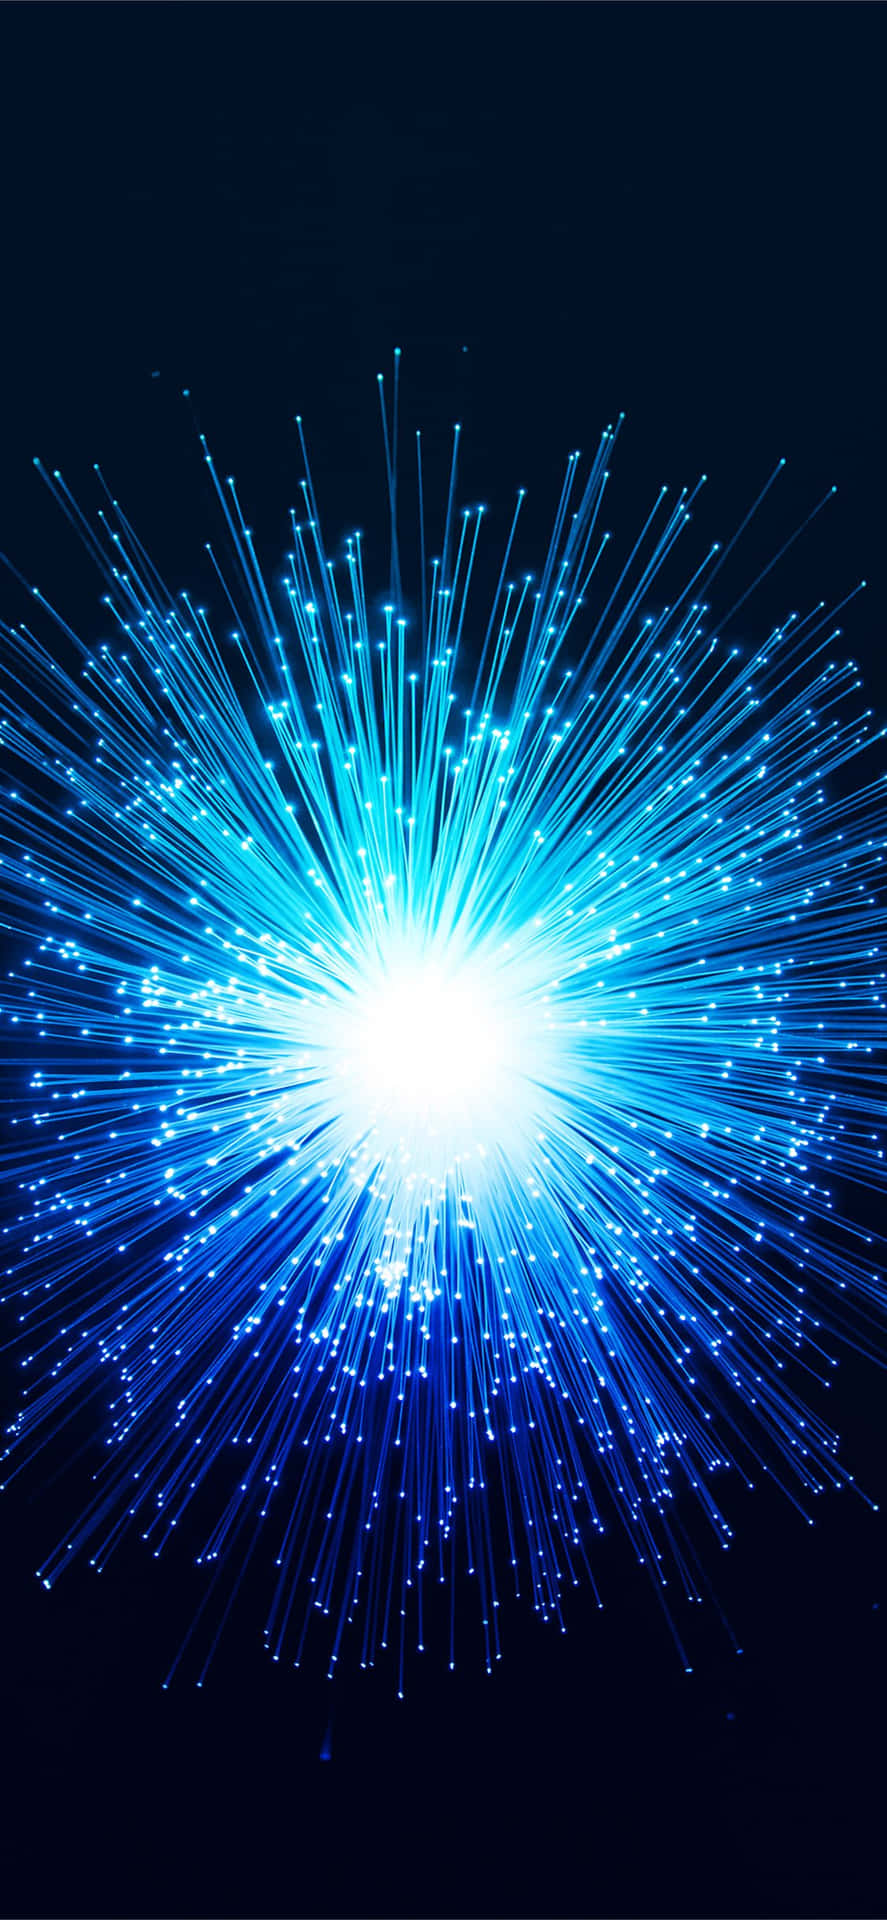 Royal Blue Fiber Optic Explosion Wallpaper